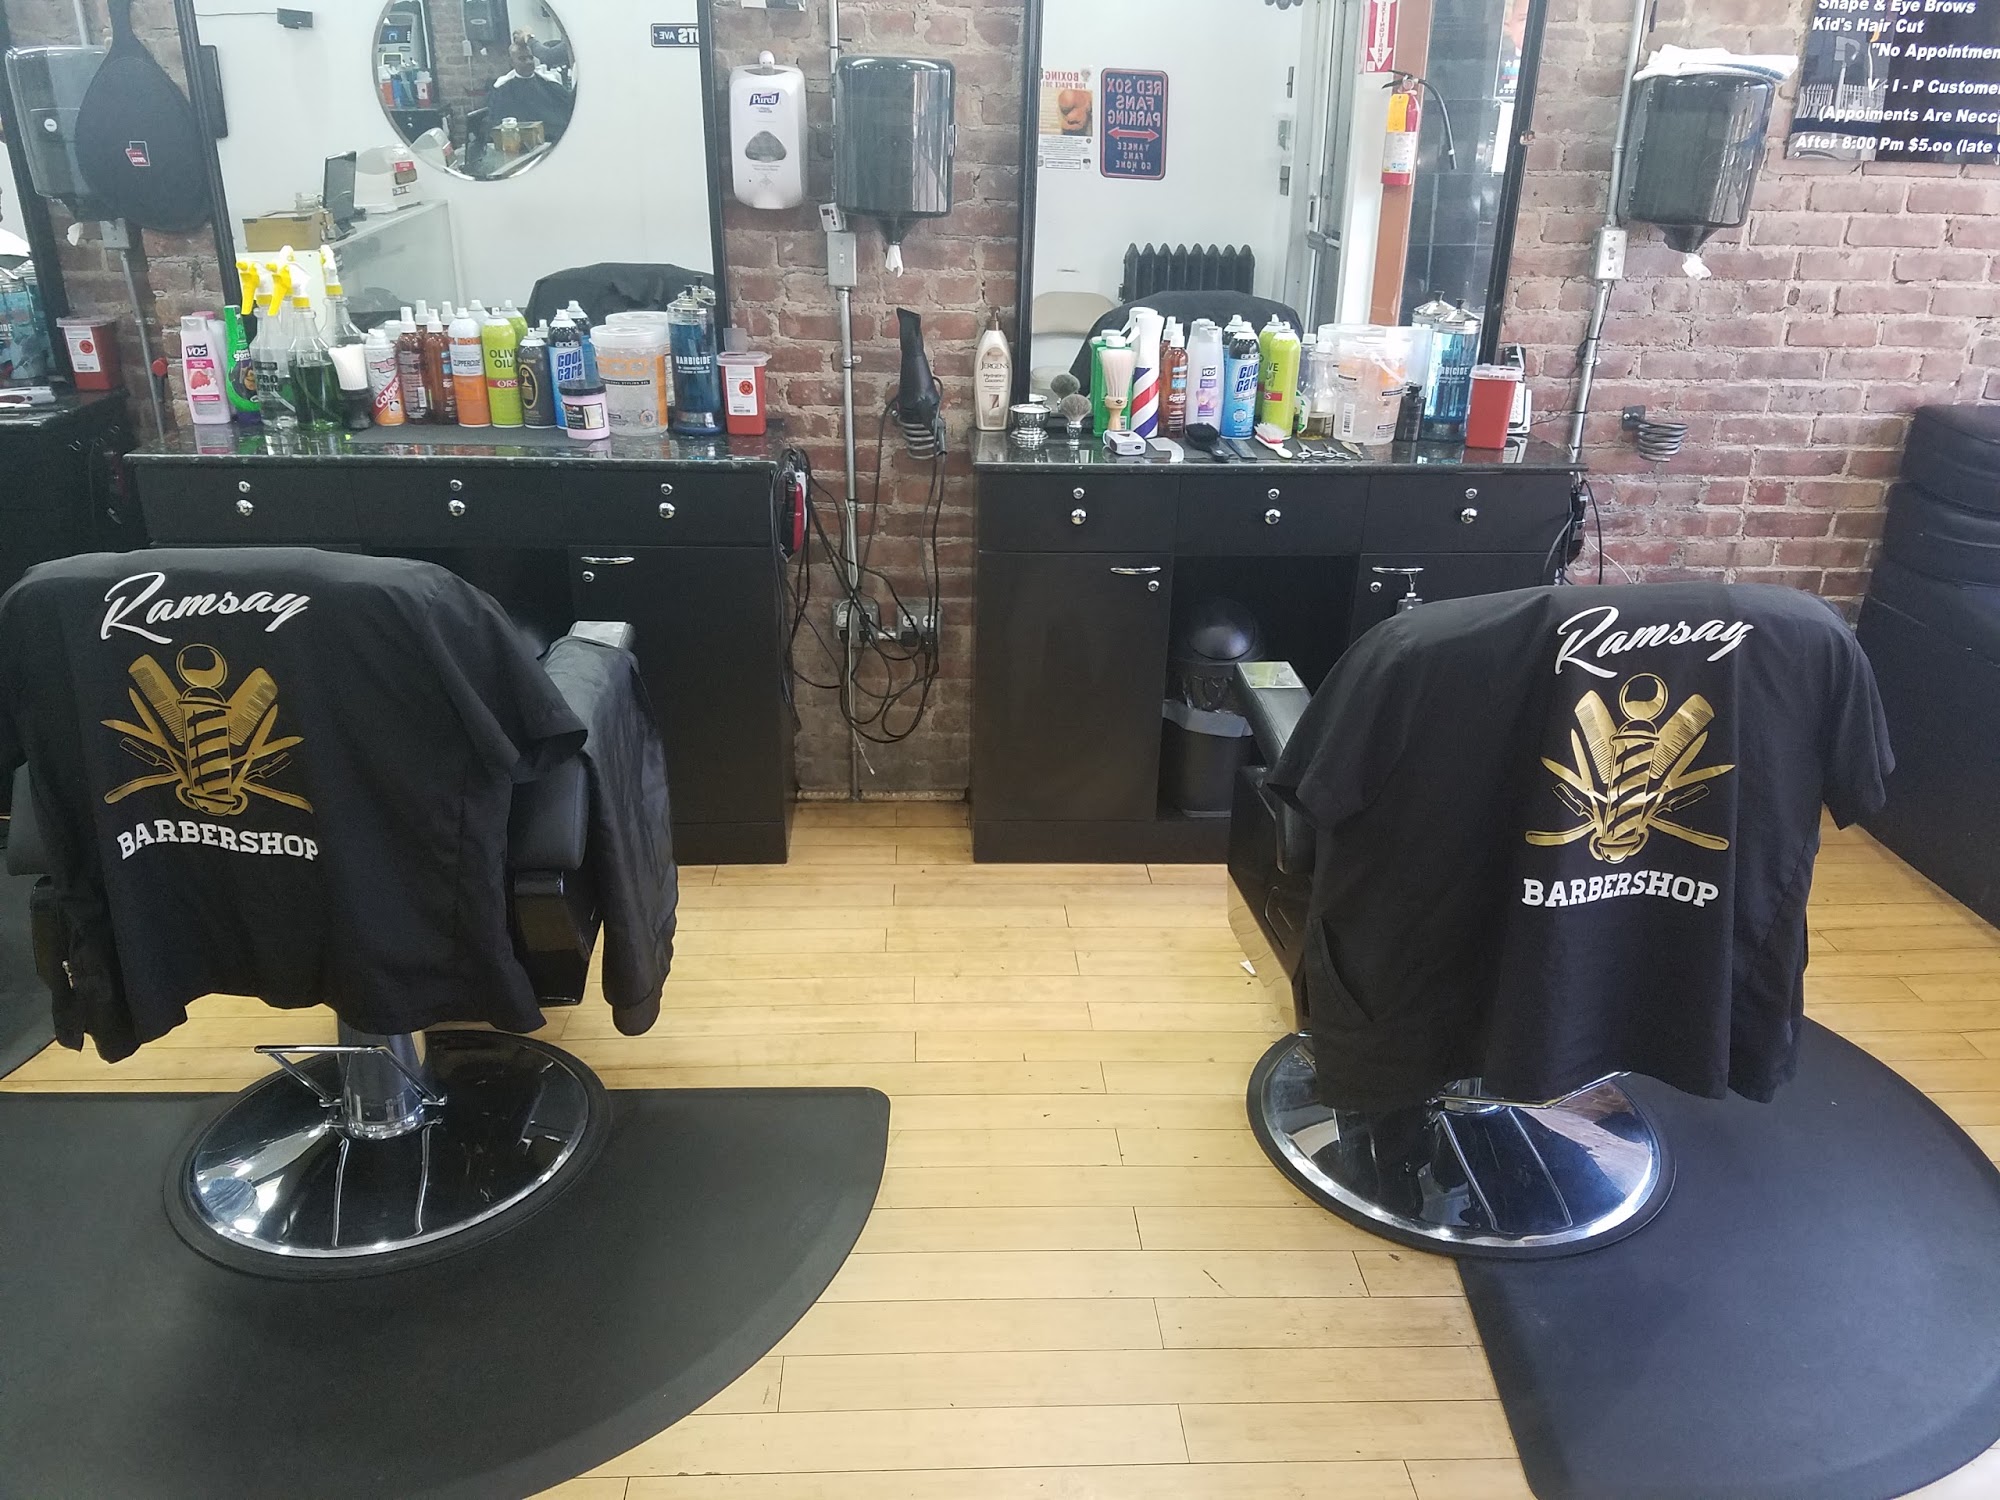 Ramsay Unisex barber shop and salon